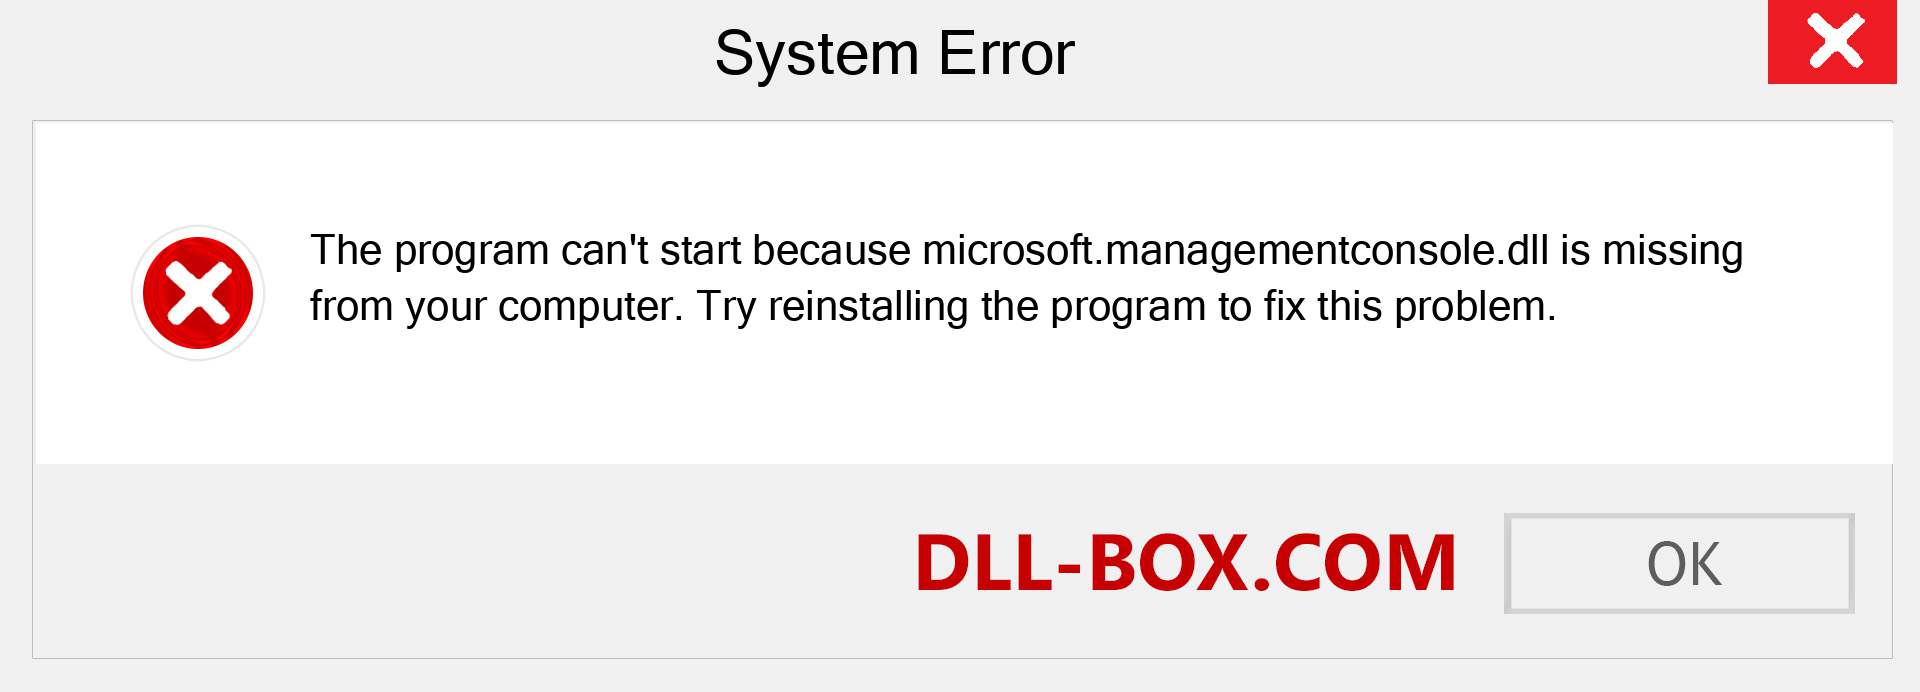  microsoft.managementconsole.dll file is missing?. Download for Windows 7, 8, 10 - Fix  microsoft.managementconsole dll Missing Error on Windows, photos, images